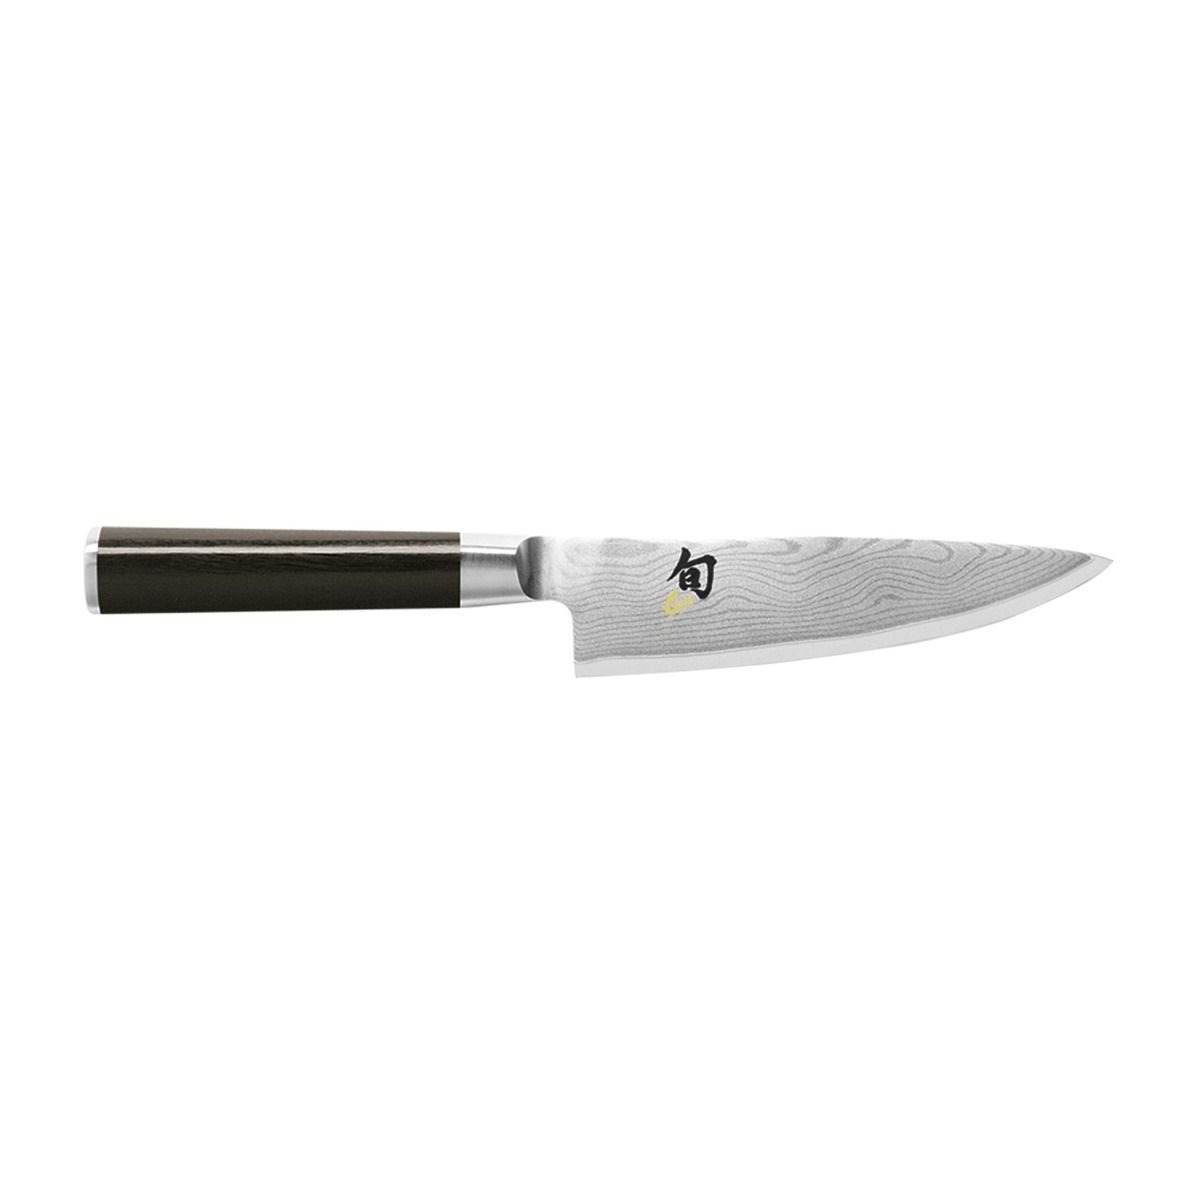 https://cdn.everythingkitchens.com/media/catalog/product/cache/70d878061ea71e5b62358b2b67547186/s/h/shun-cutlery-classic-series-6-inch-chefs-knife-dm0723_7.jpg